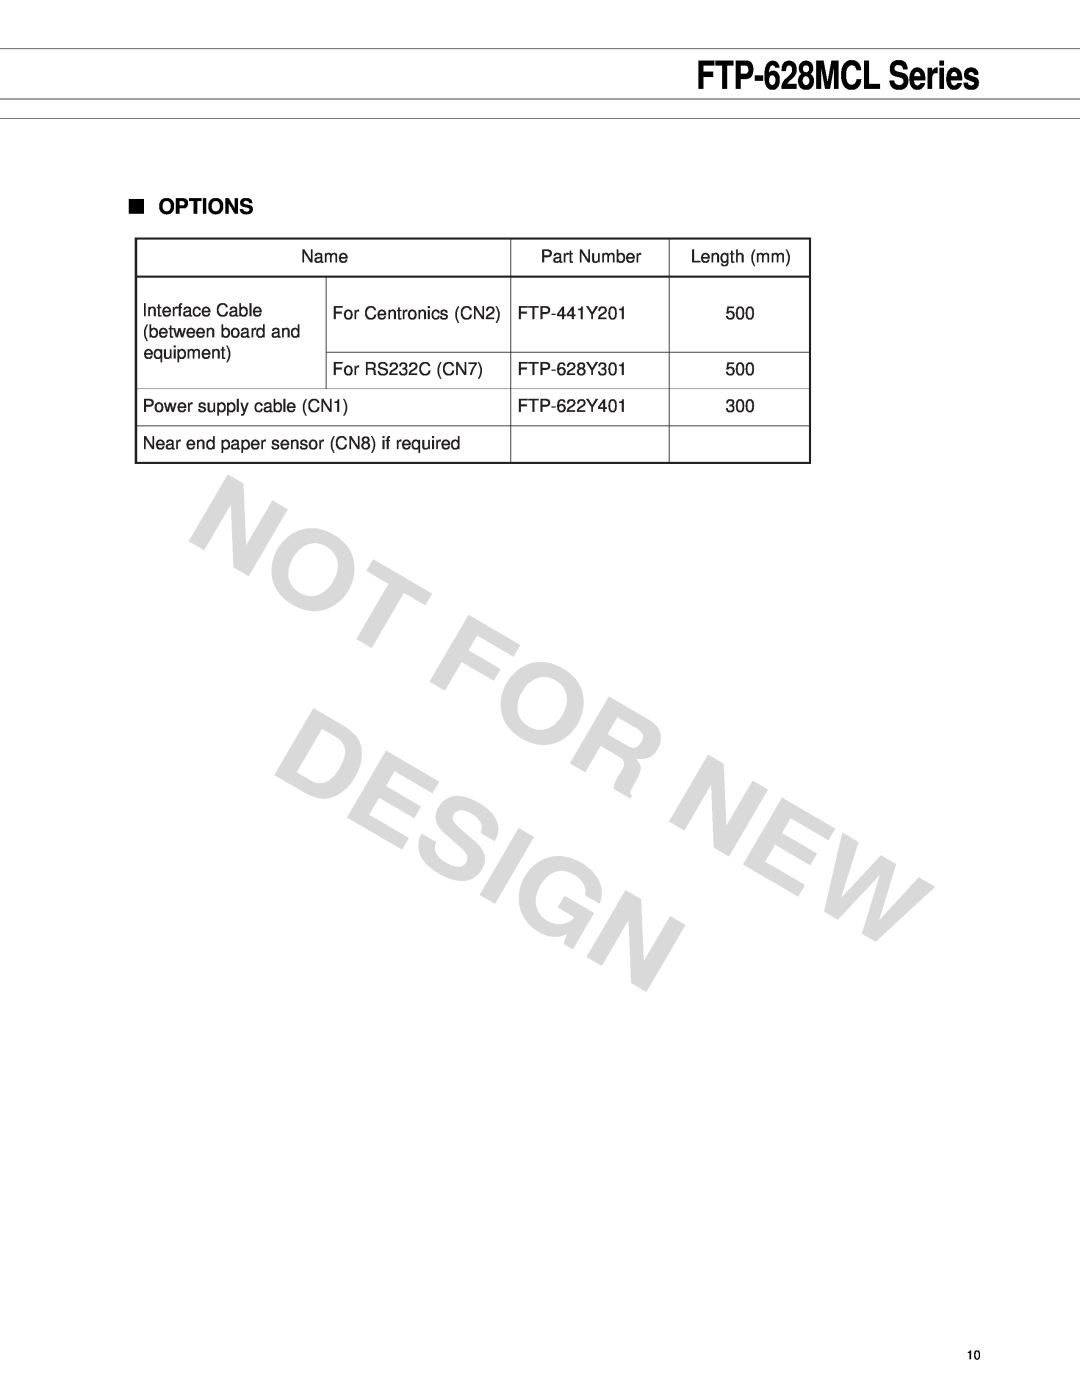 Fujitsu FTP-628 Series manual Options, Designnew, FTP-628MCL Series 